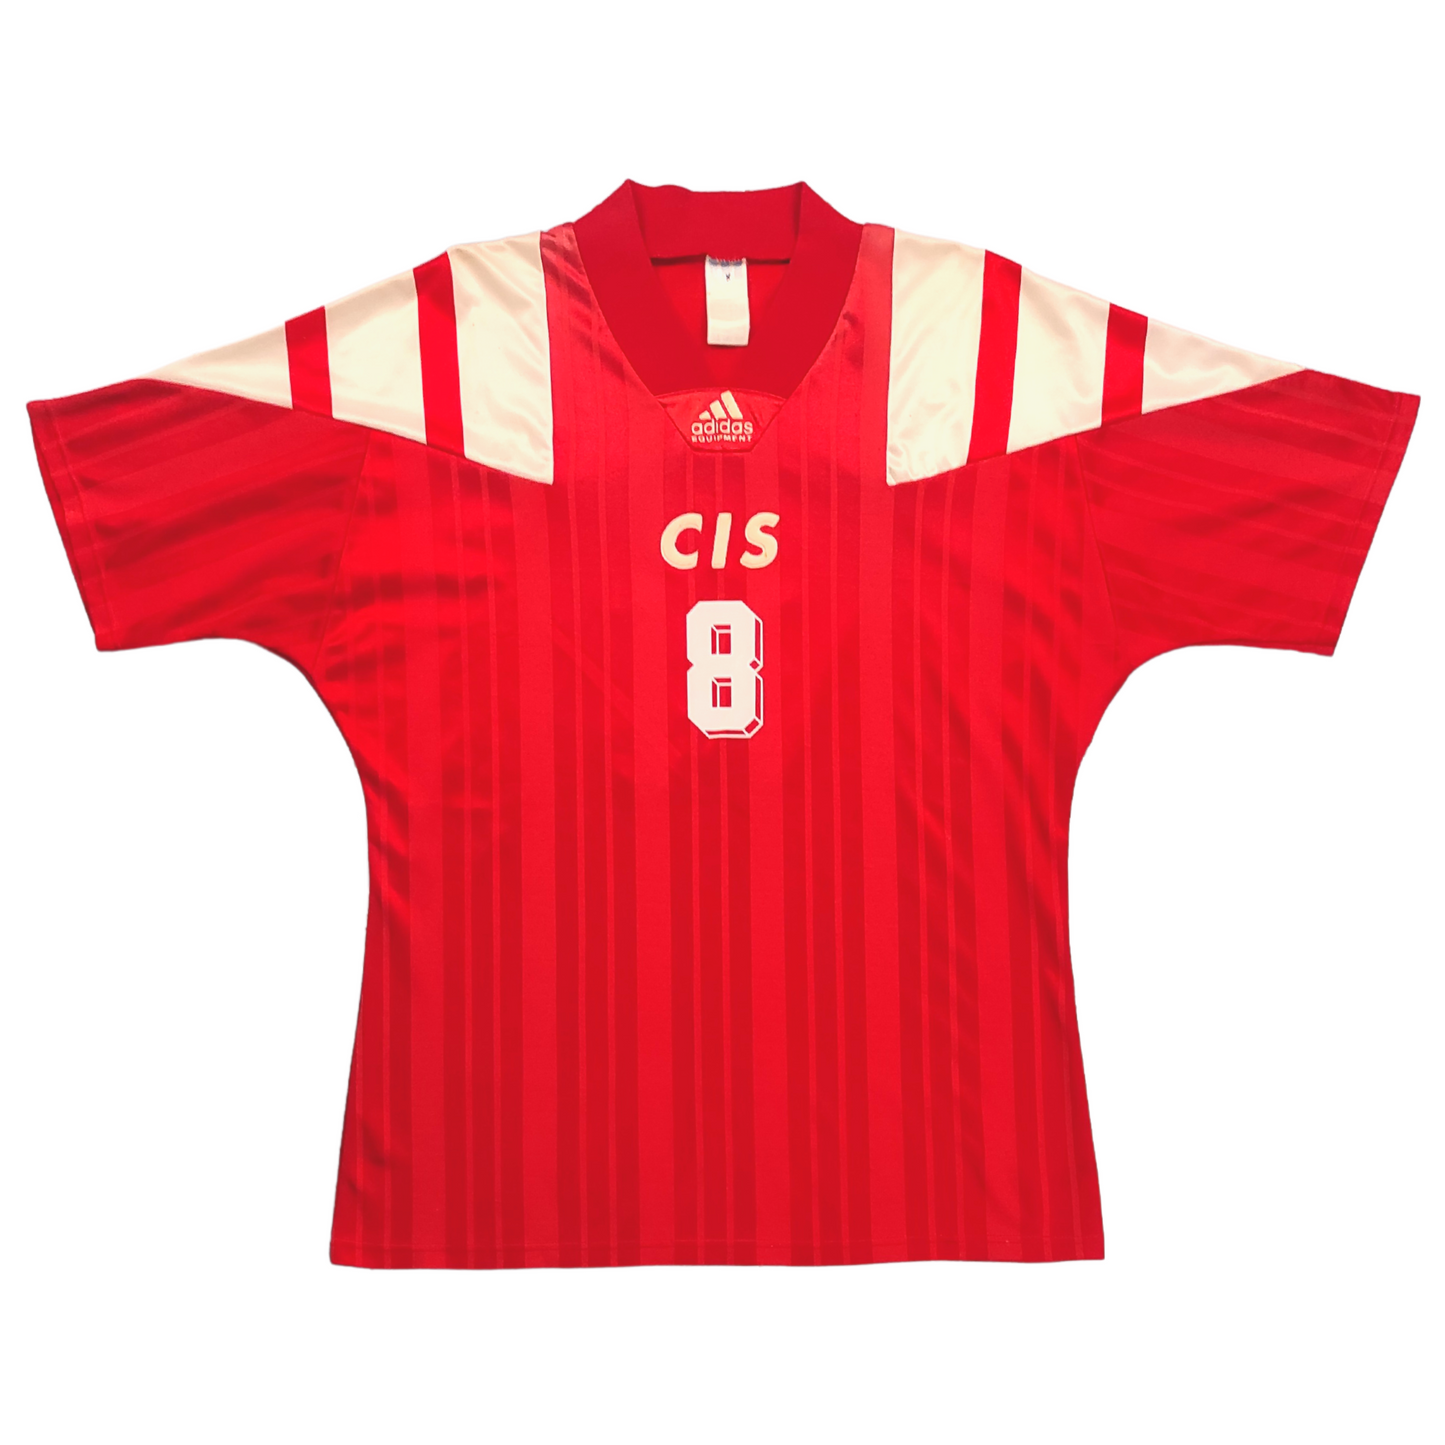 CIS Home Shirt Euro 1992 Kanchelkis (L)